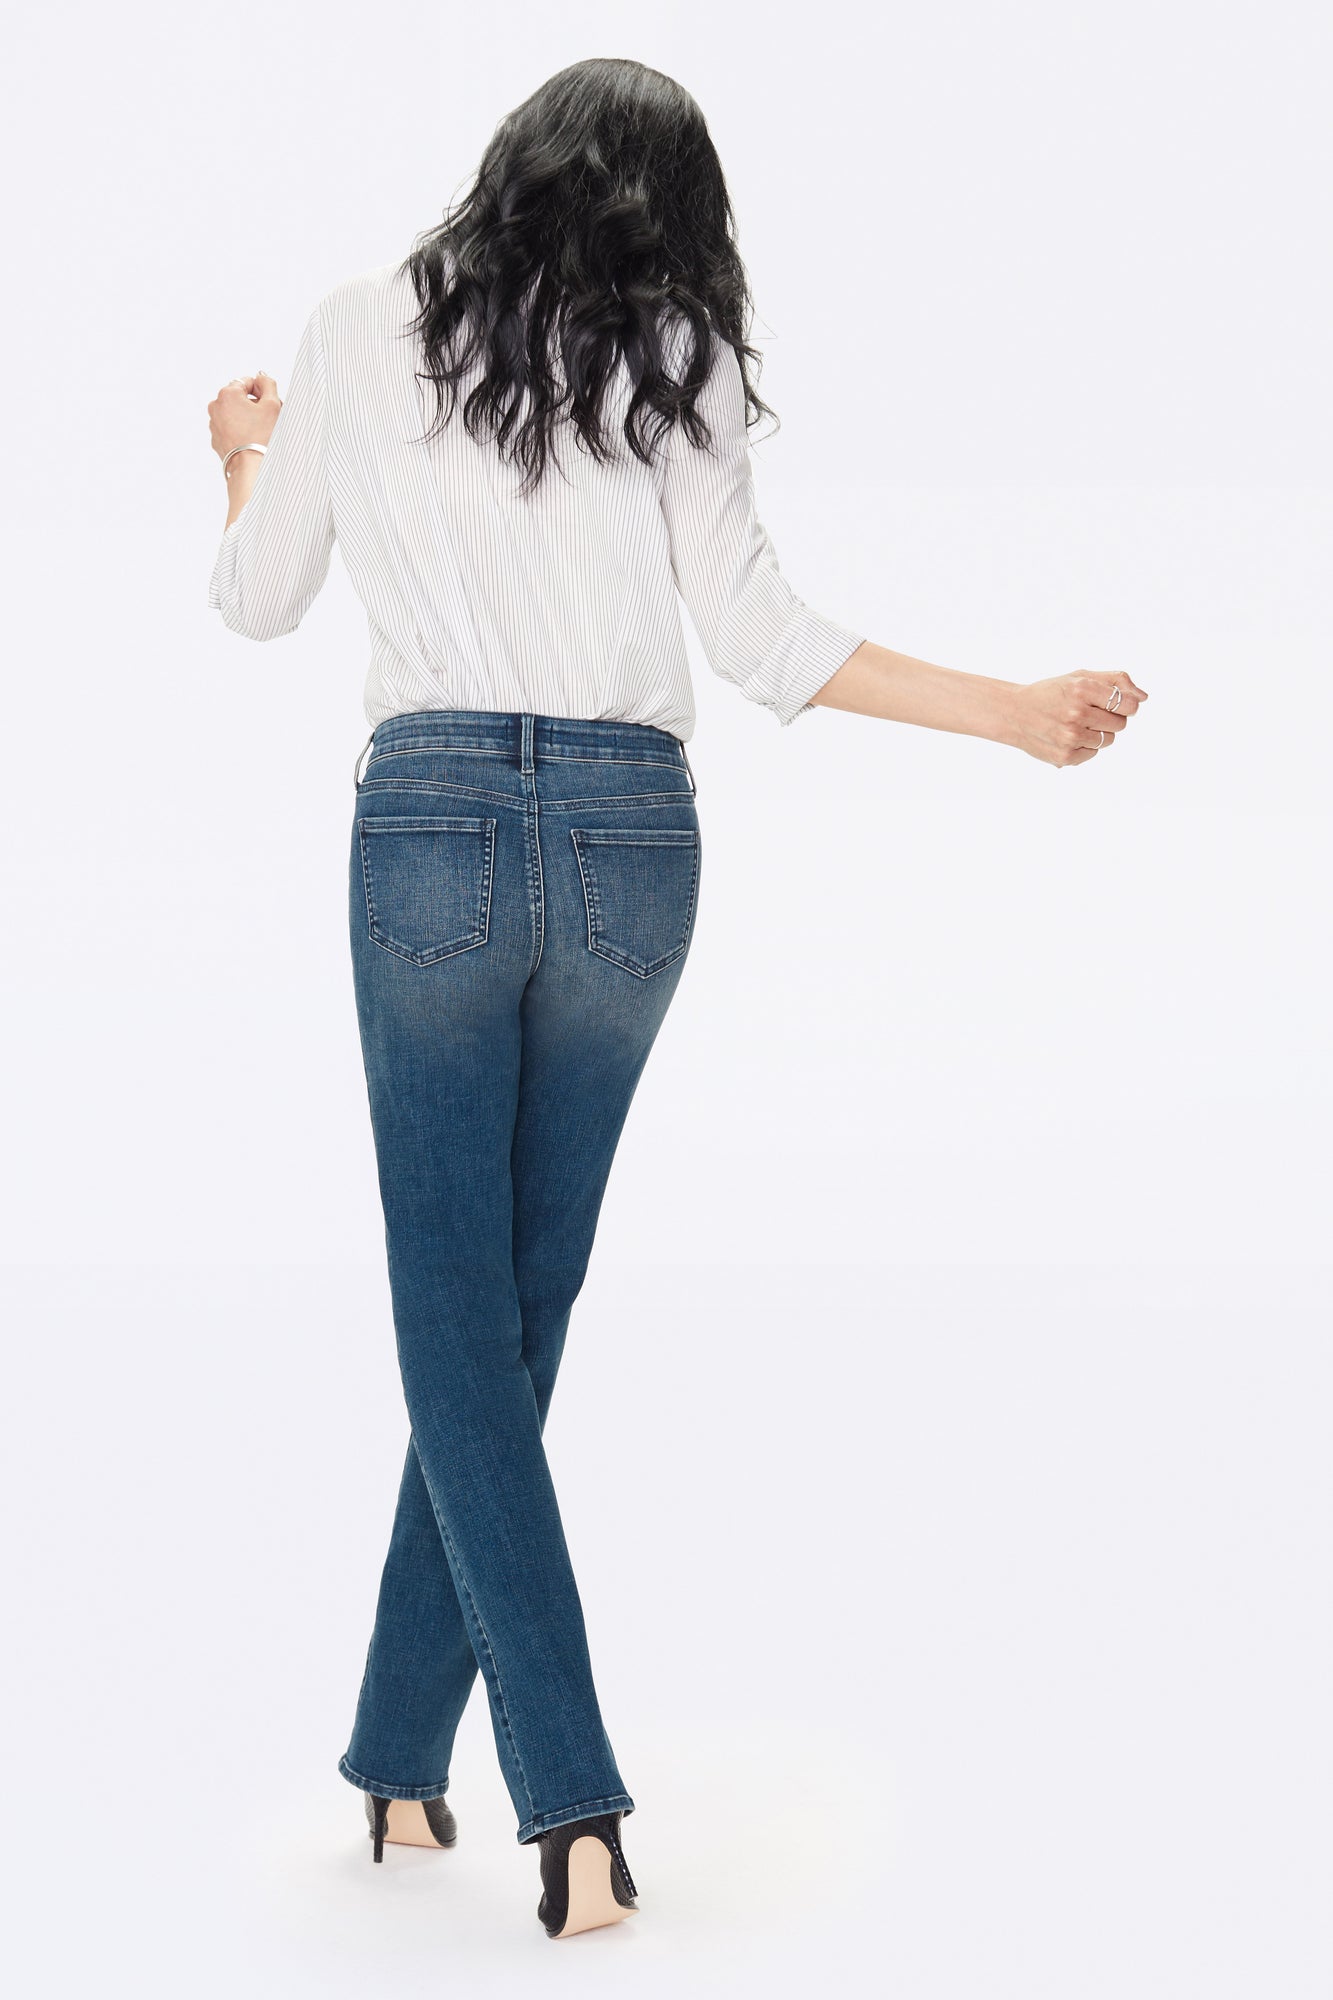 NYDJ Marilyn Straight Jeans  - Lombard